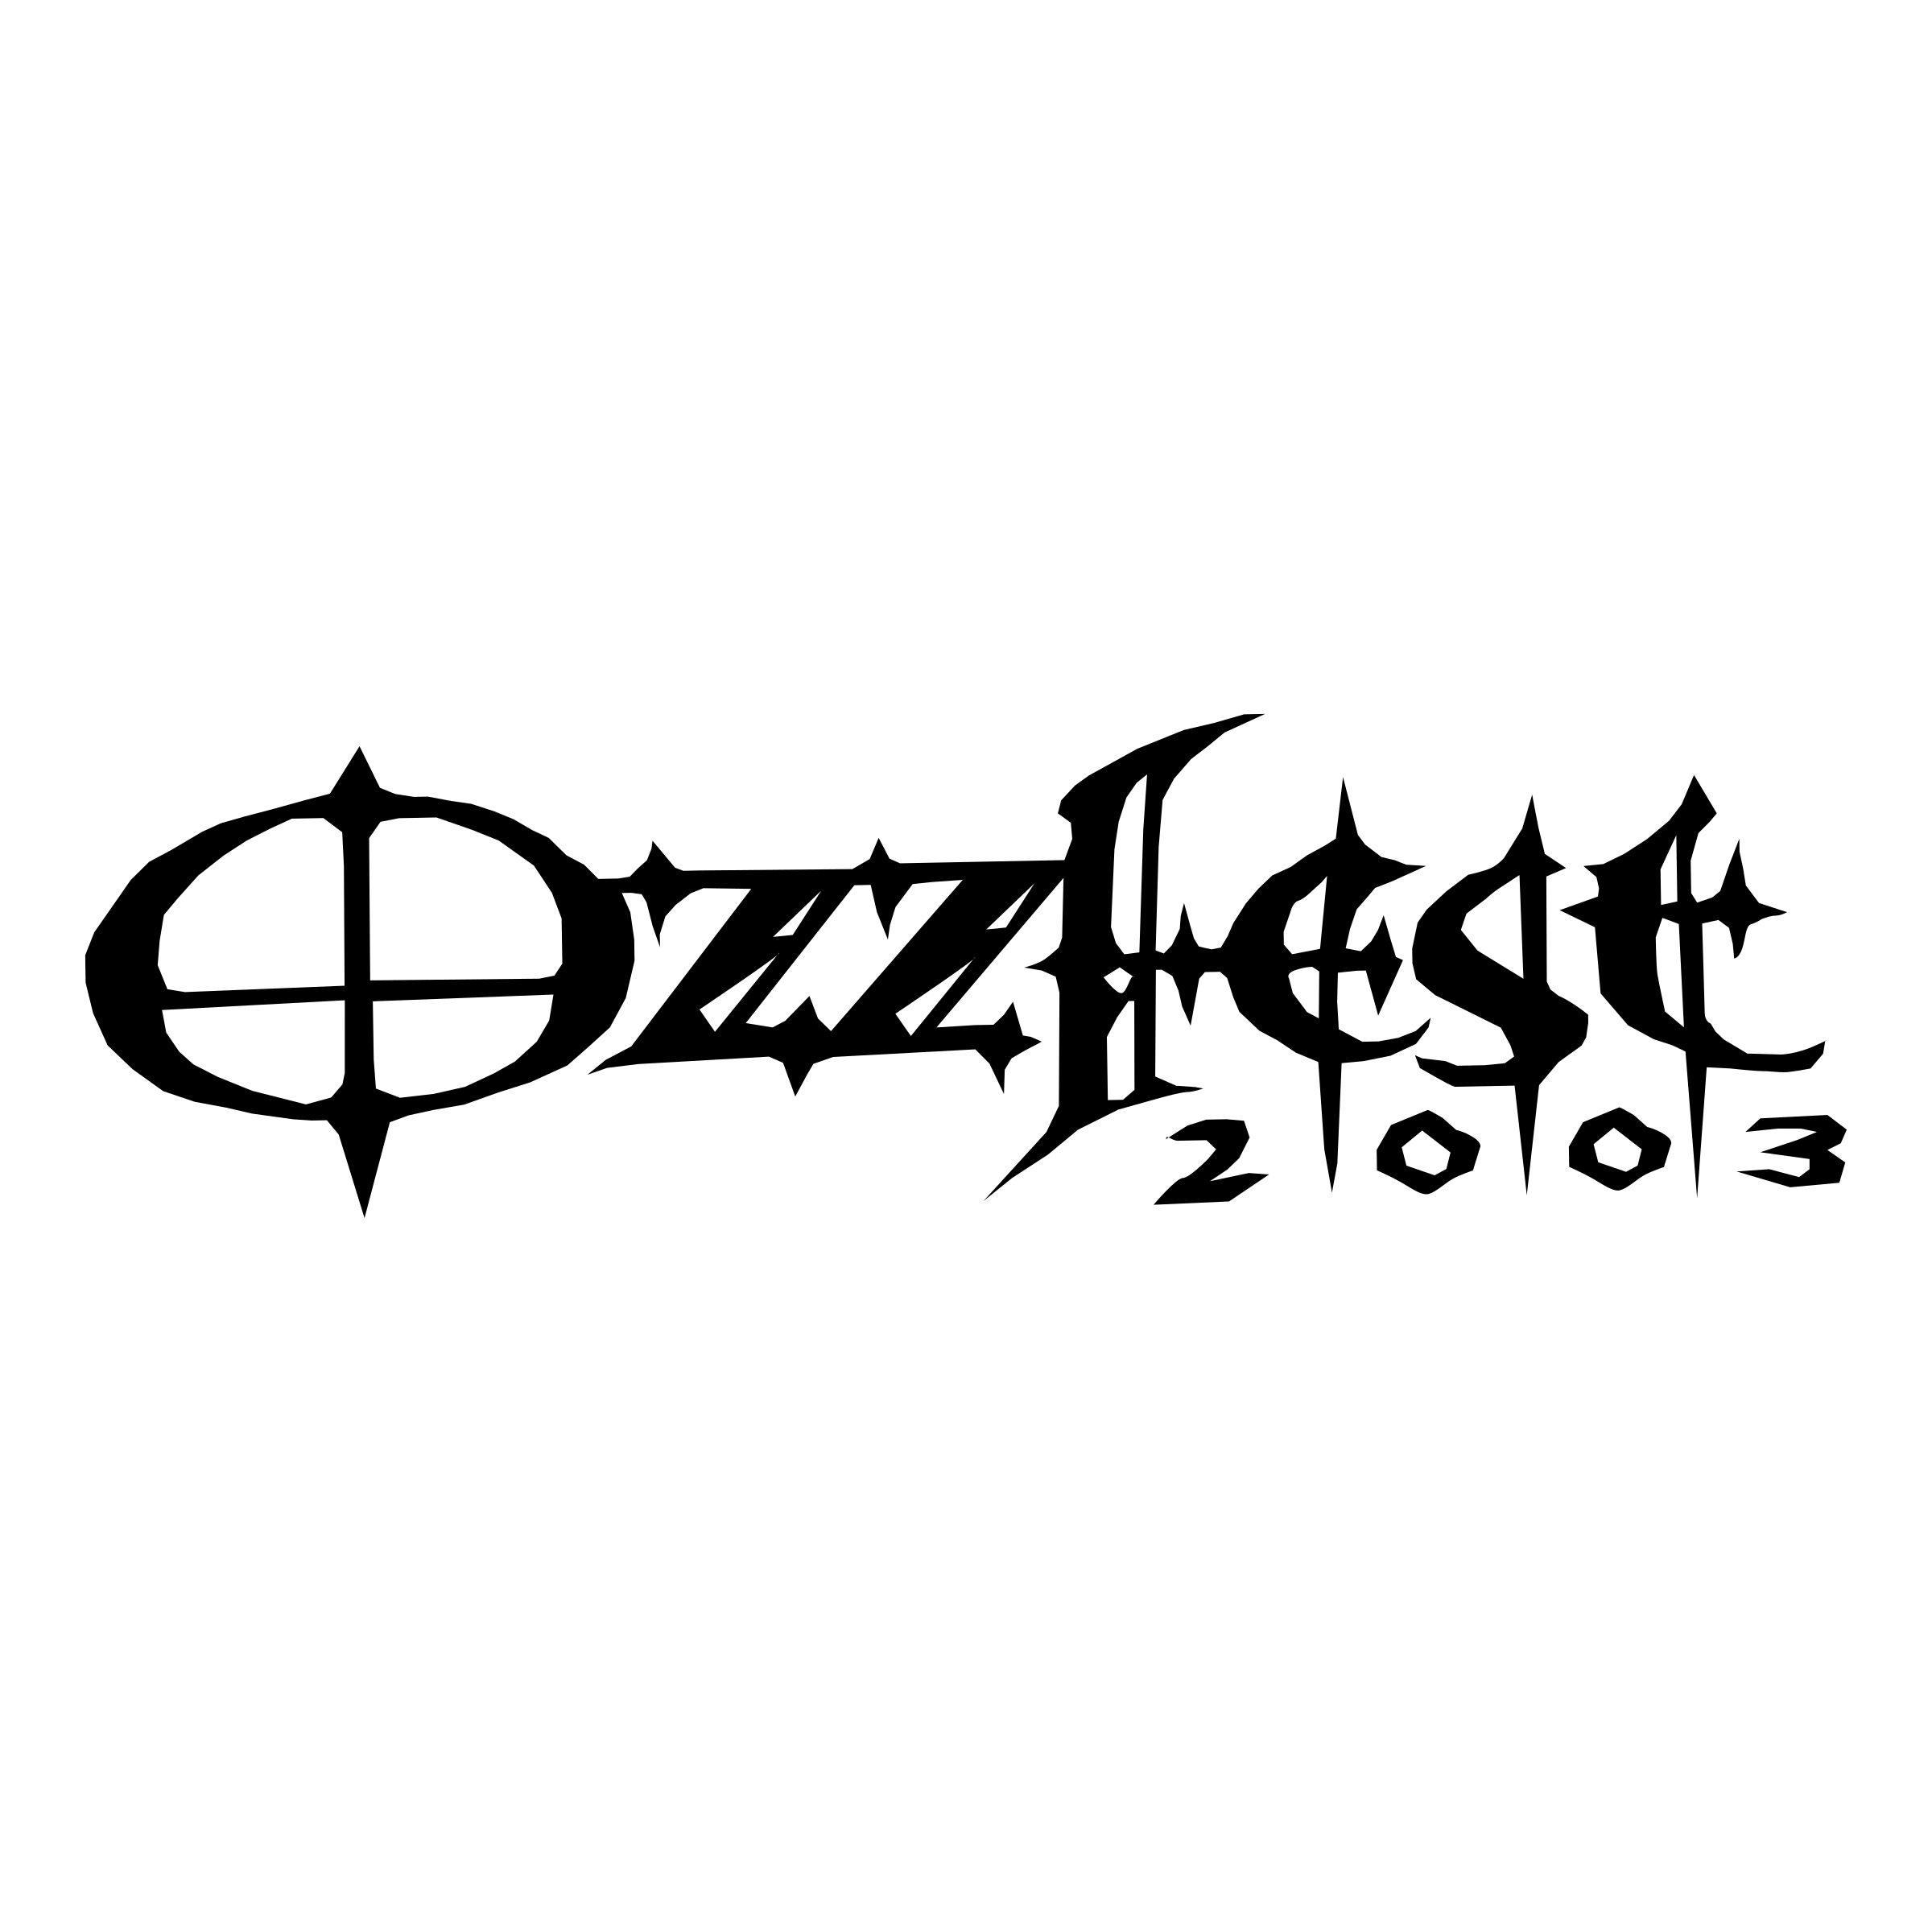 2003 Logo - Ozzfest 2003 Logo PNG Transparent & SVG Vector - Freebie Supply